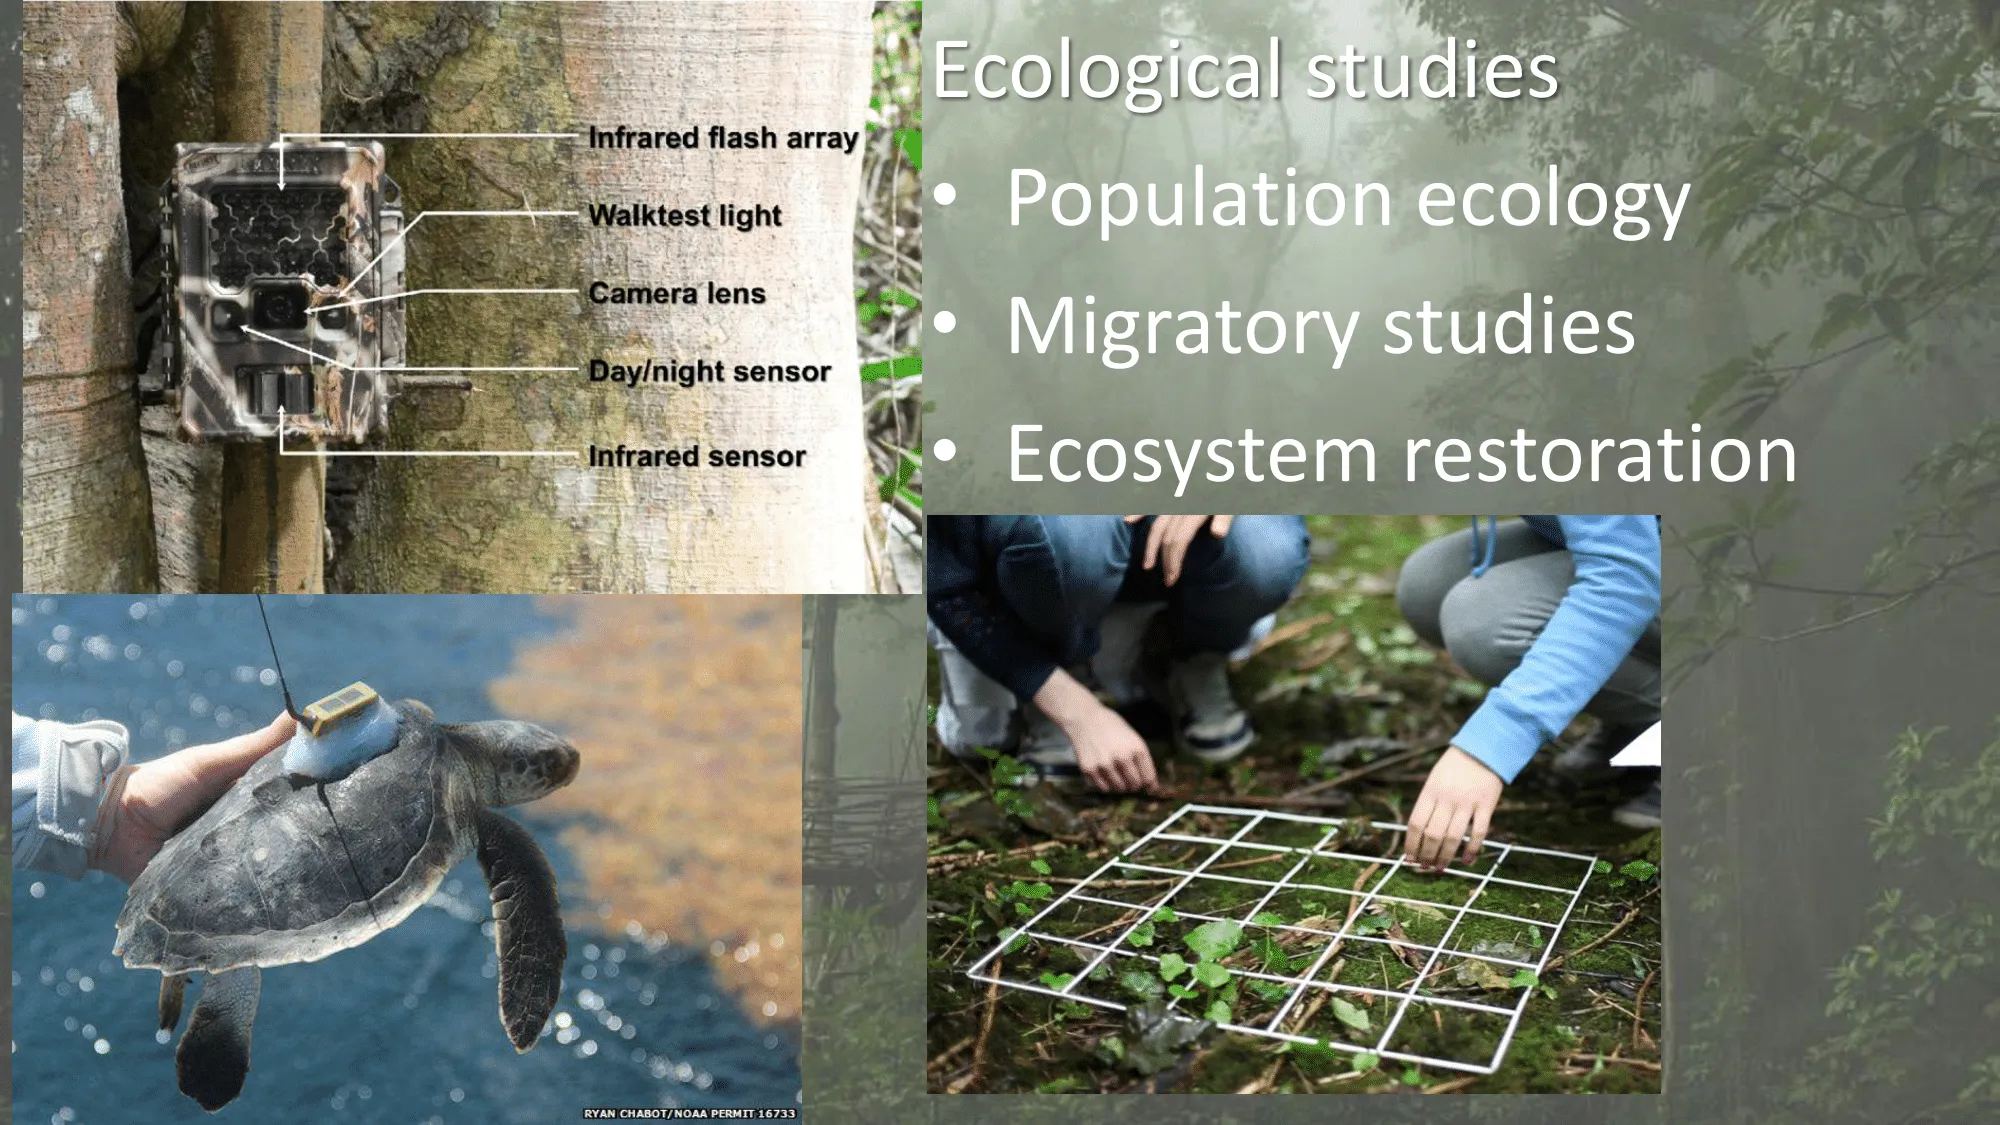 Ecological studies includes population ecology, migration studies and ecosystem restoration